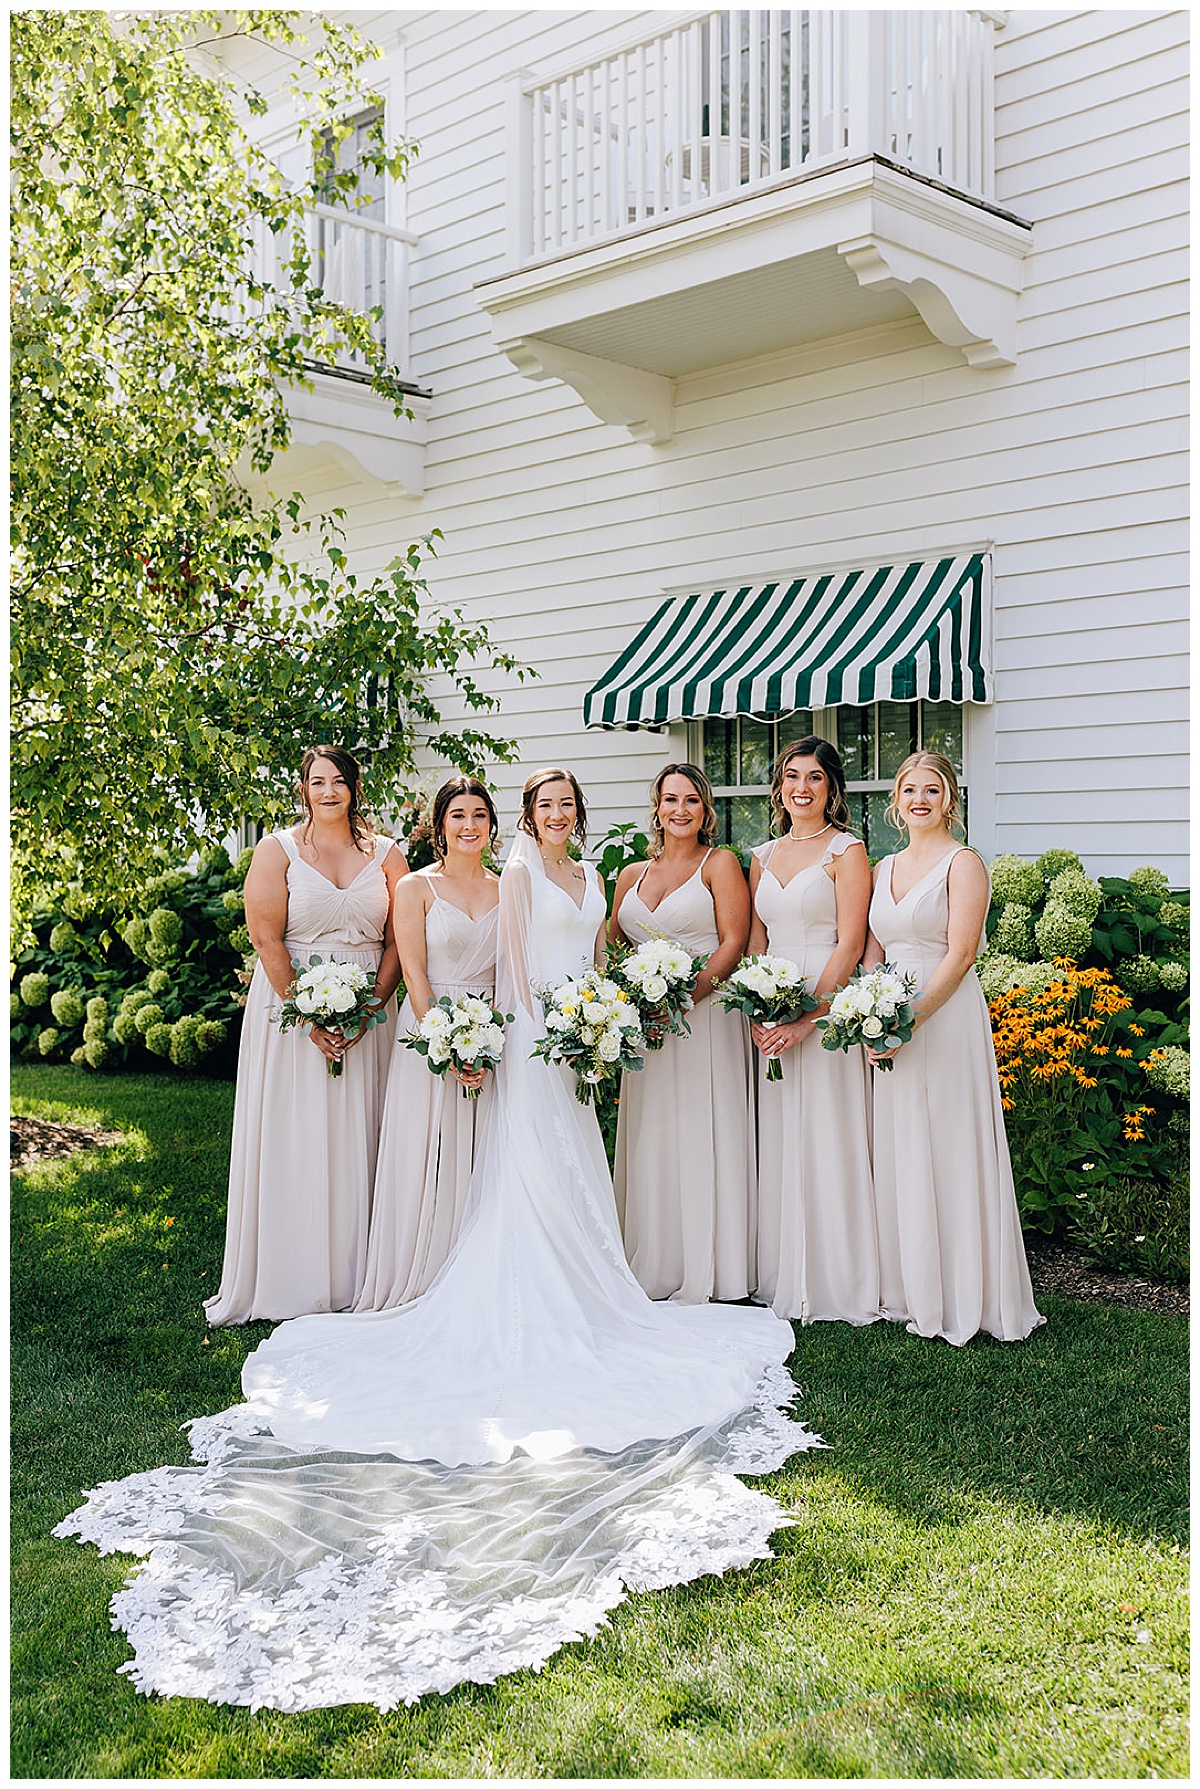 Bridal party by Kayla Bouren Photography